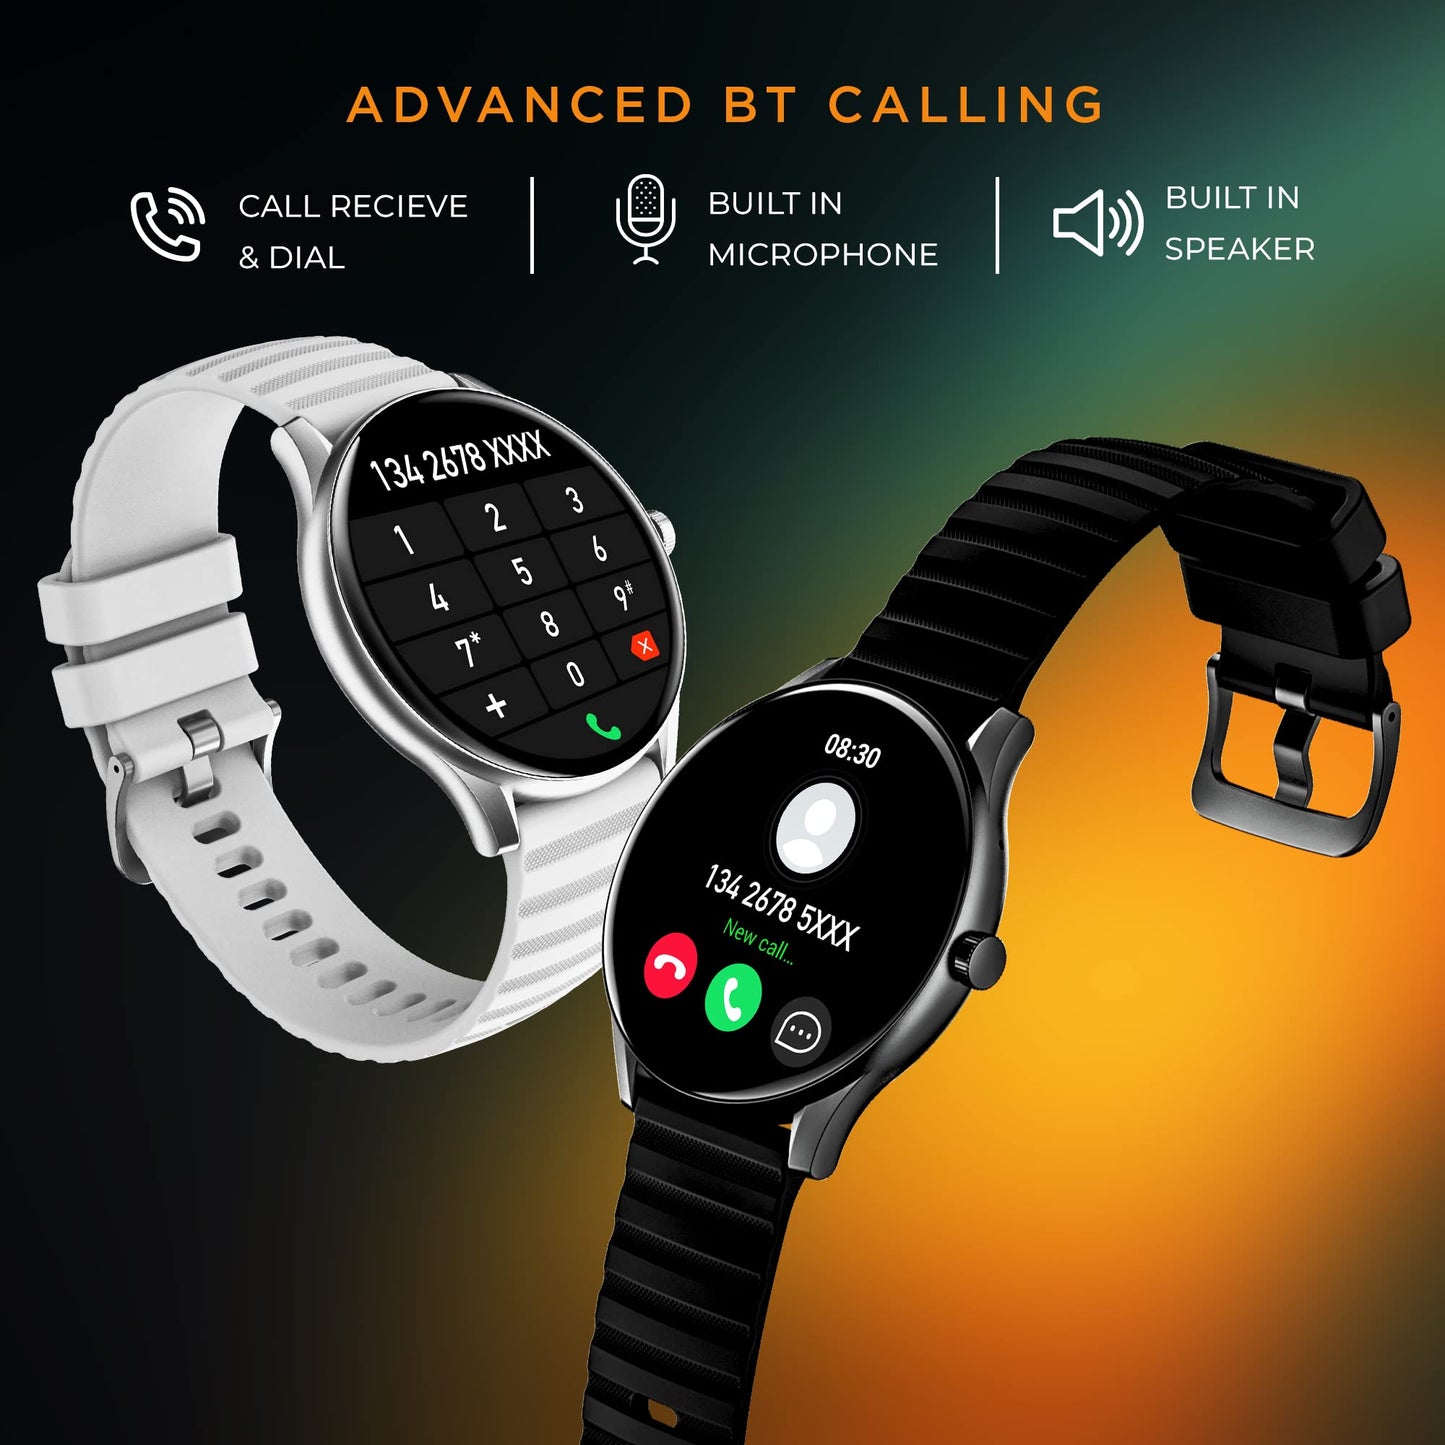 GIZMORE Gizfit Curve 3.54cm (1.39) |AOD 500 NITS|360x360 HD Display Bluetooth Calling Smartwatch (Black)